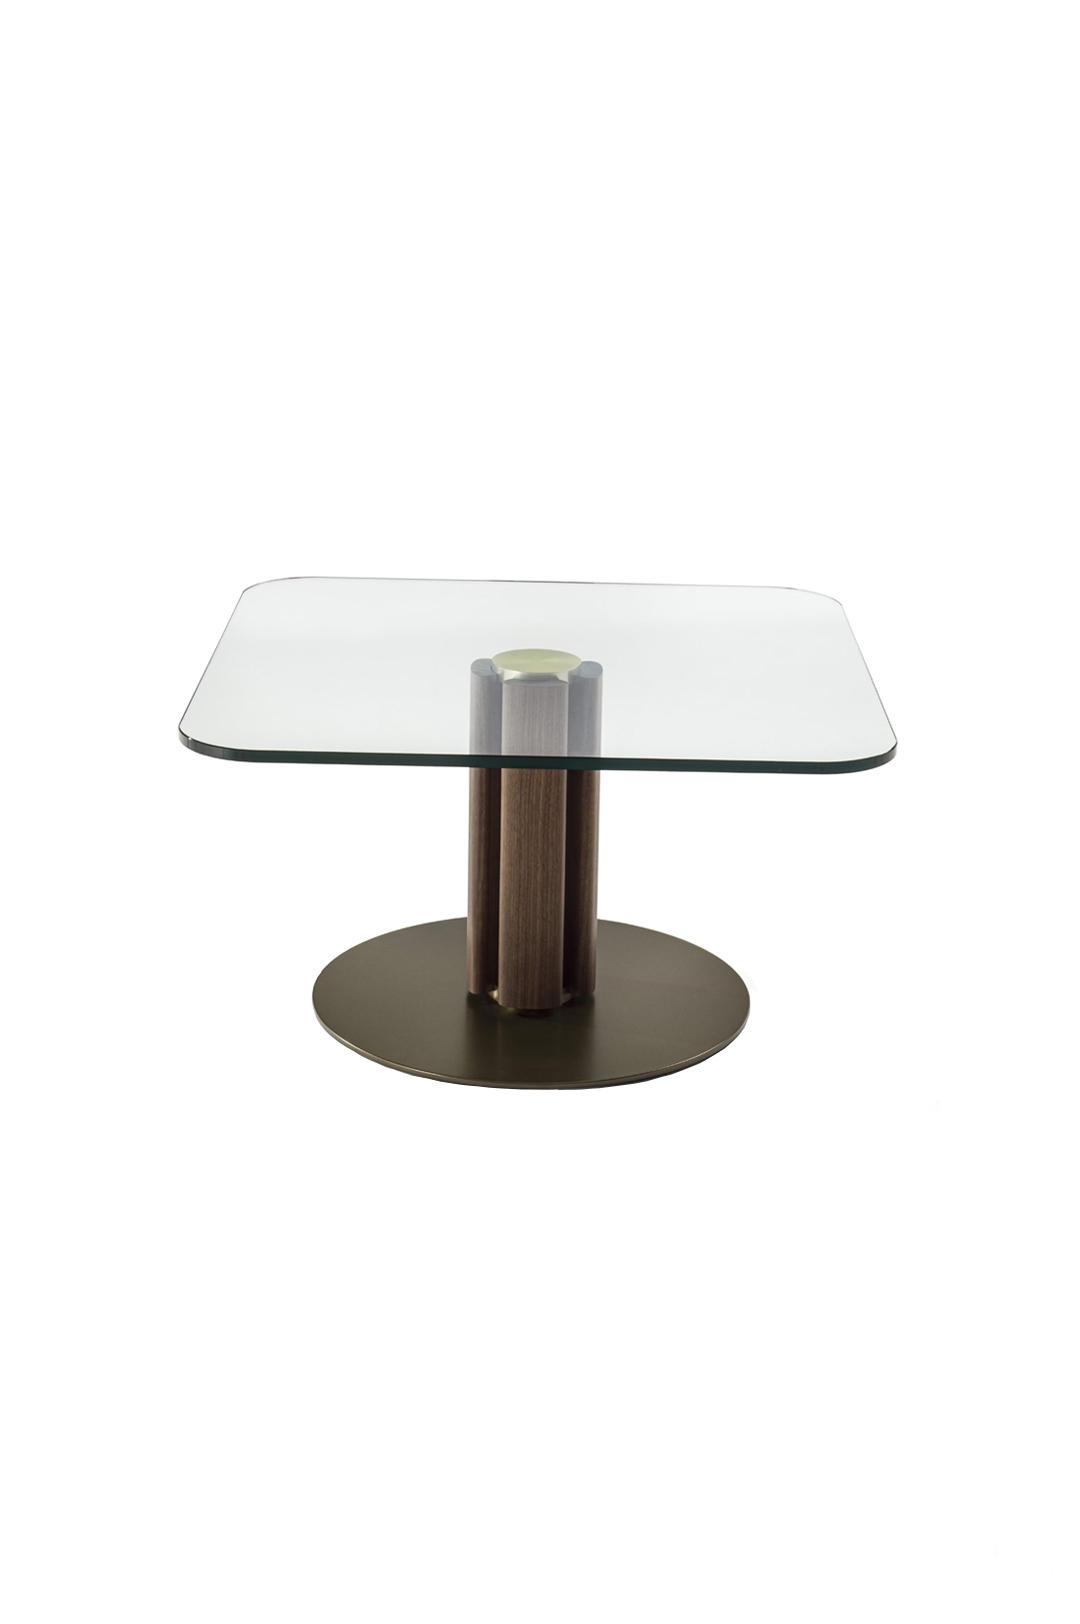 Столик Quadrifoglio tavolino h45 от Porada — Фотография 1